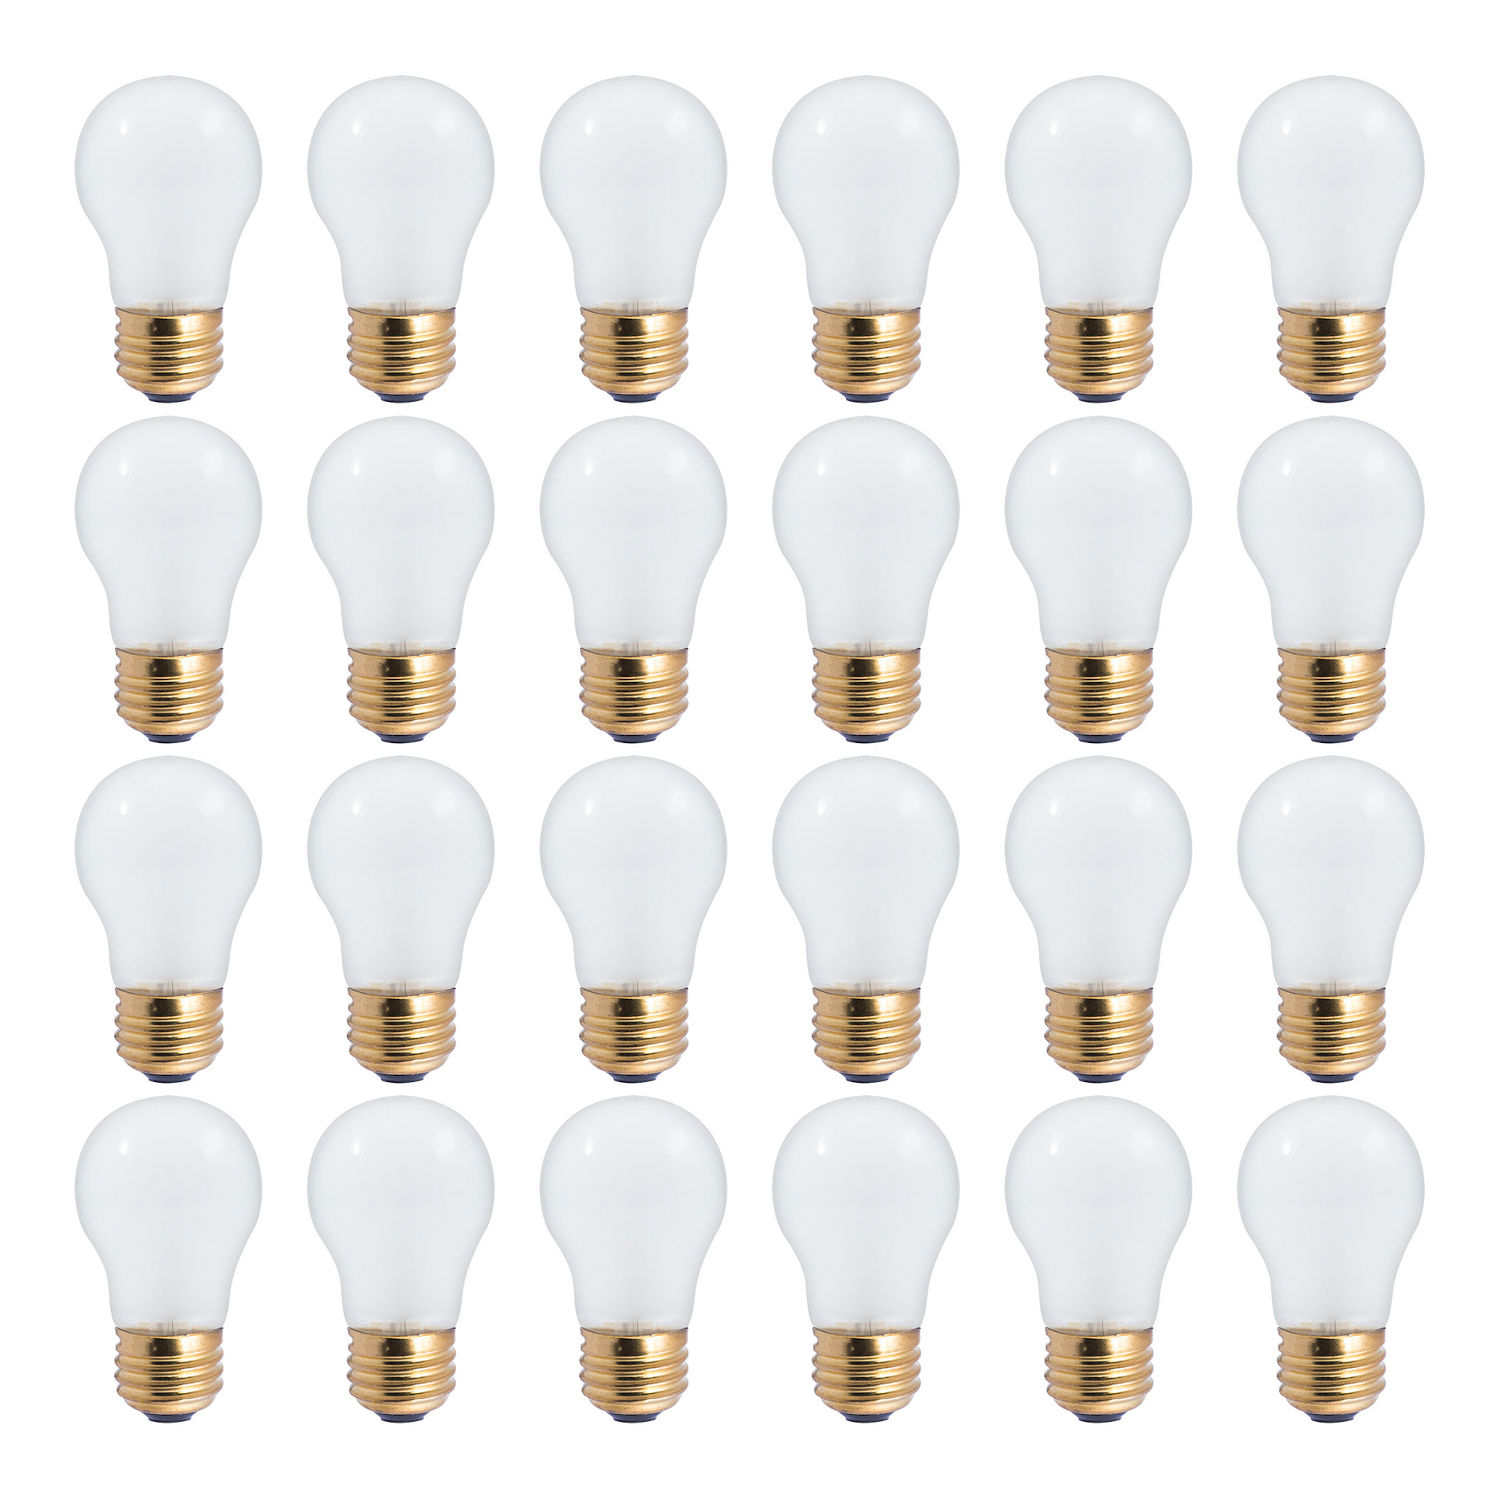 Type A Bulbs Category